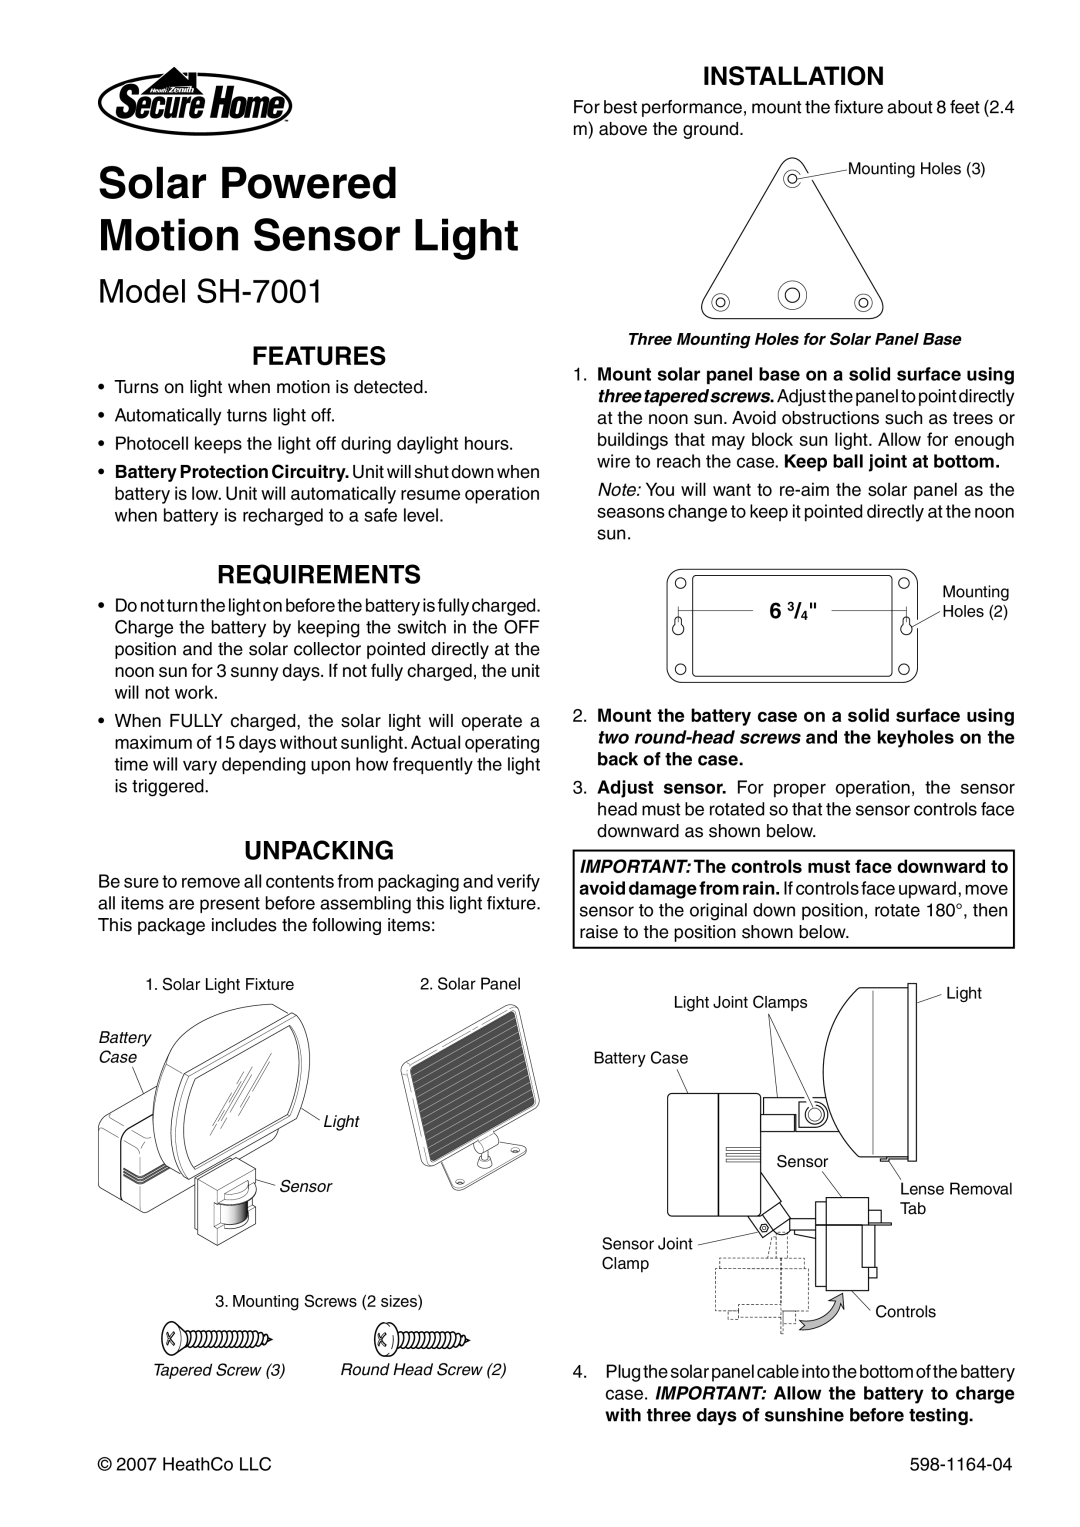 Heath Zenith manual Solar Powered Motion Sensor Light, Model SH-7001, Features, Requirements, Unpacking, Installation 